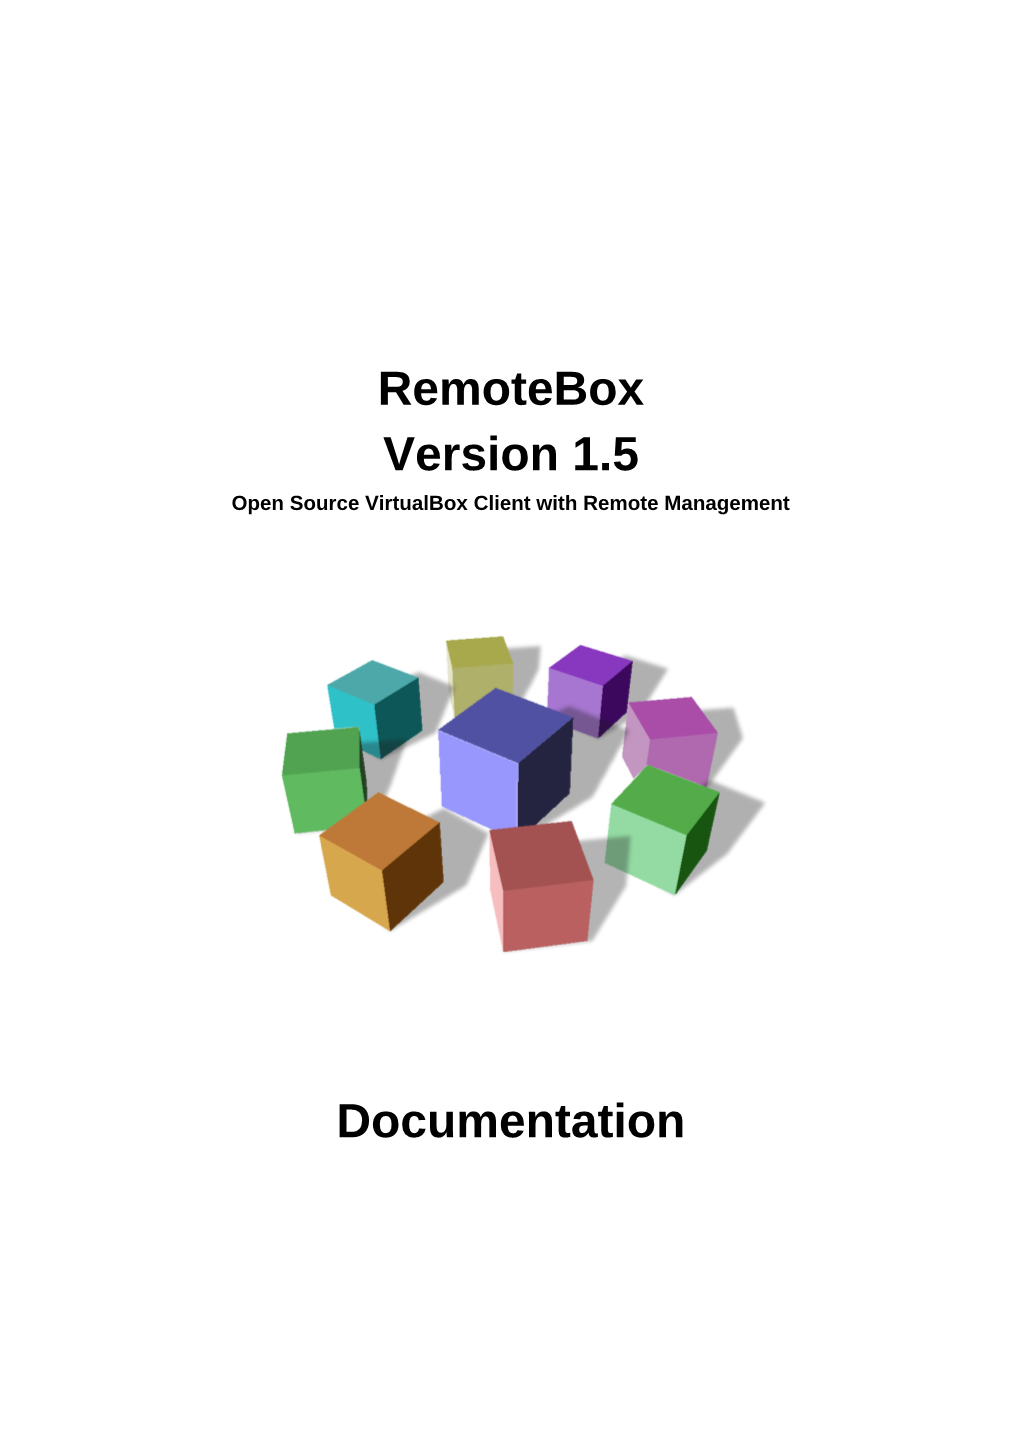 Remotebox Version 1.5 Documentation